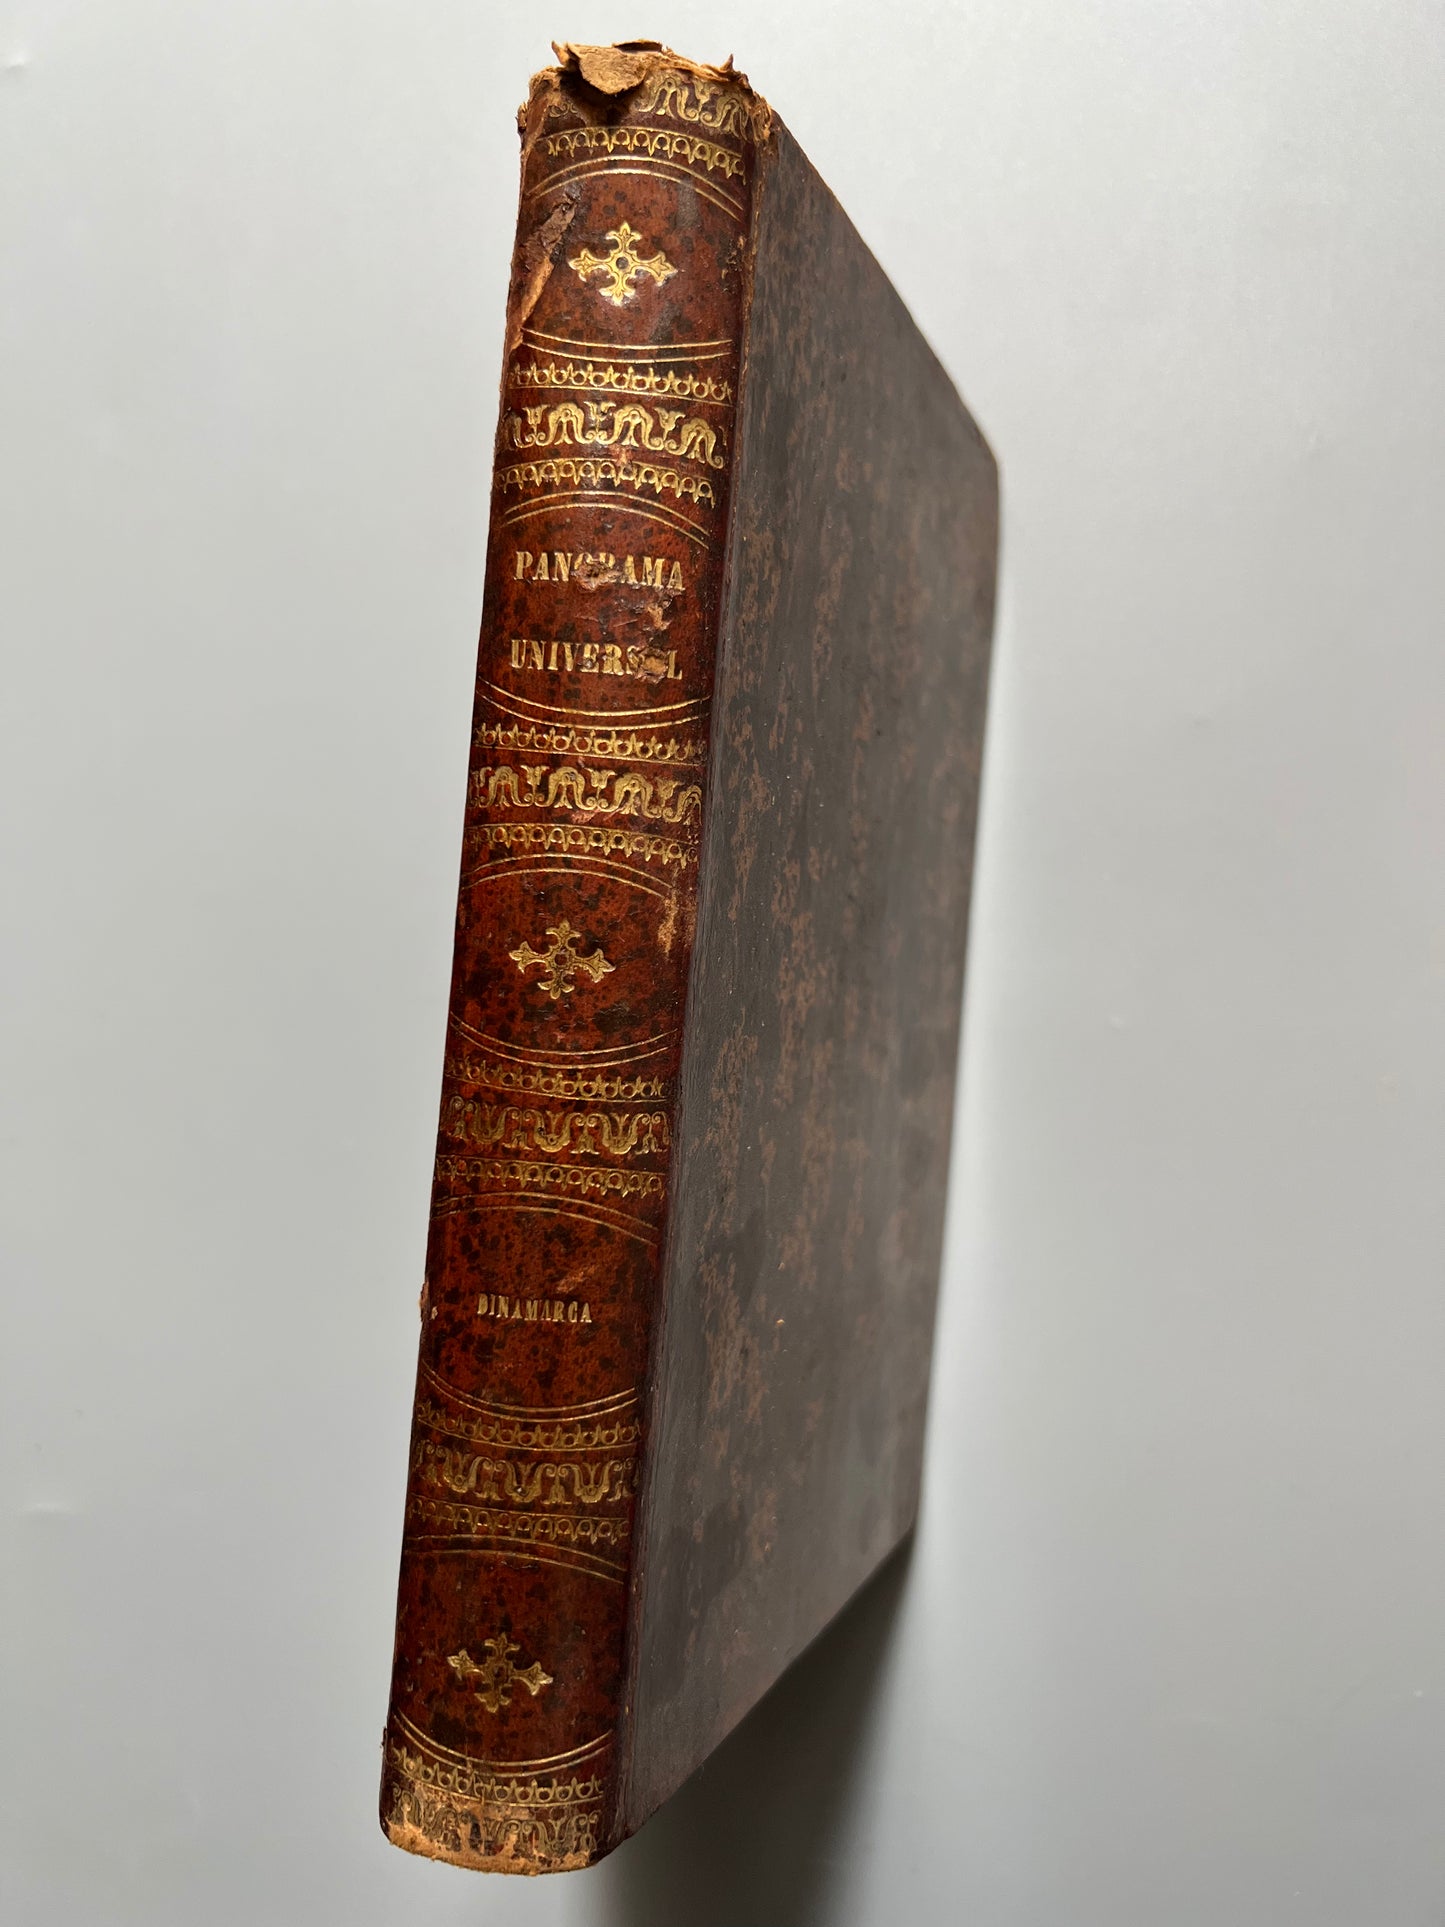 Historia de Dinamarca, M. J. B. Eyres. Panorama Universal - Imprenta de A. Frecas, 1850